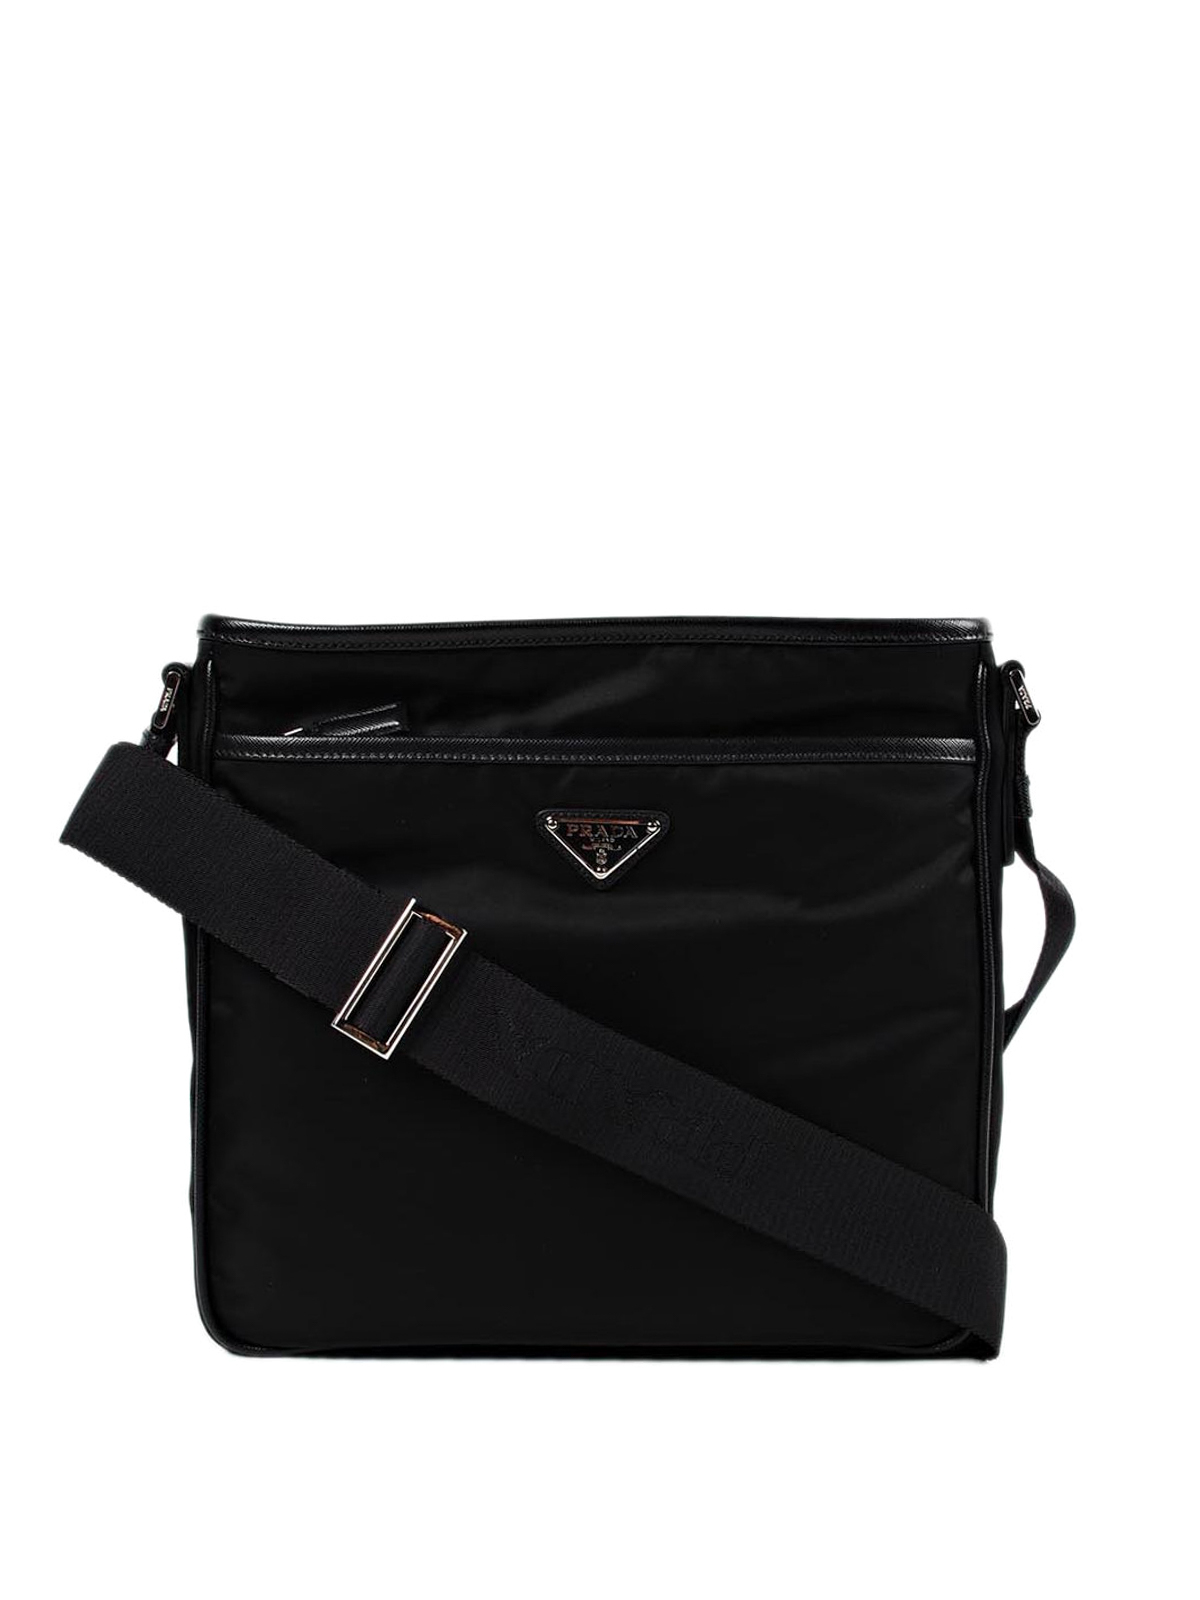 Prada Messenger shoulder bag in black nylon